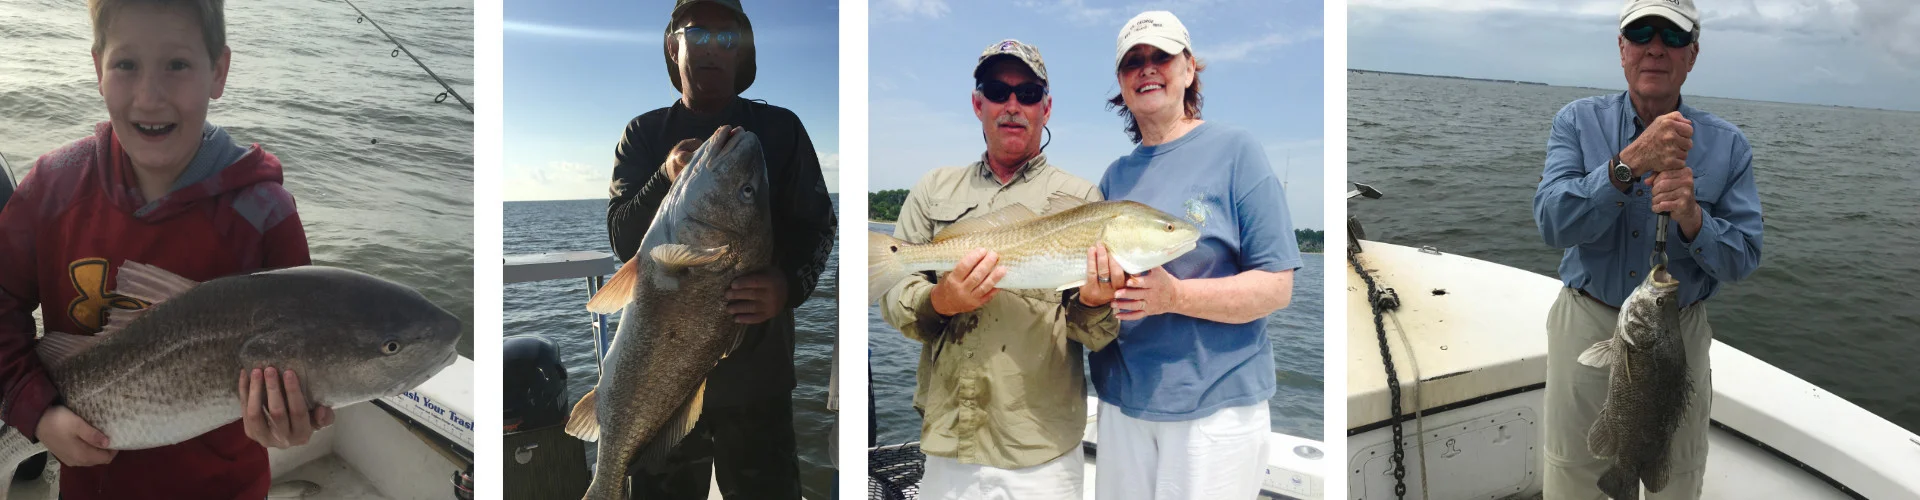 St George Island Fishing Charters - Apalachicola Fishing Charters